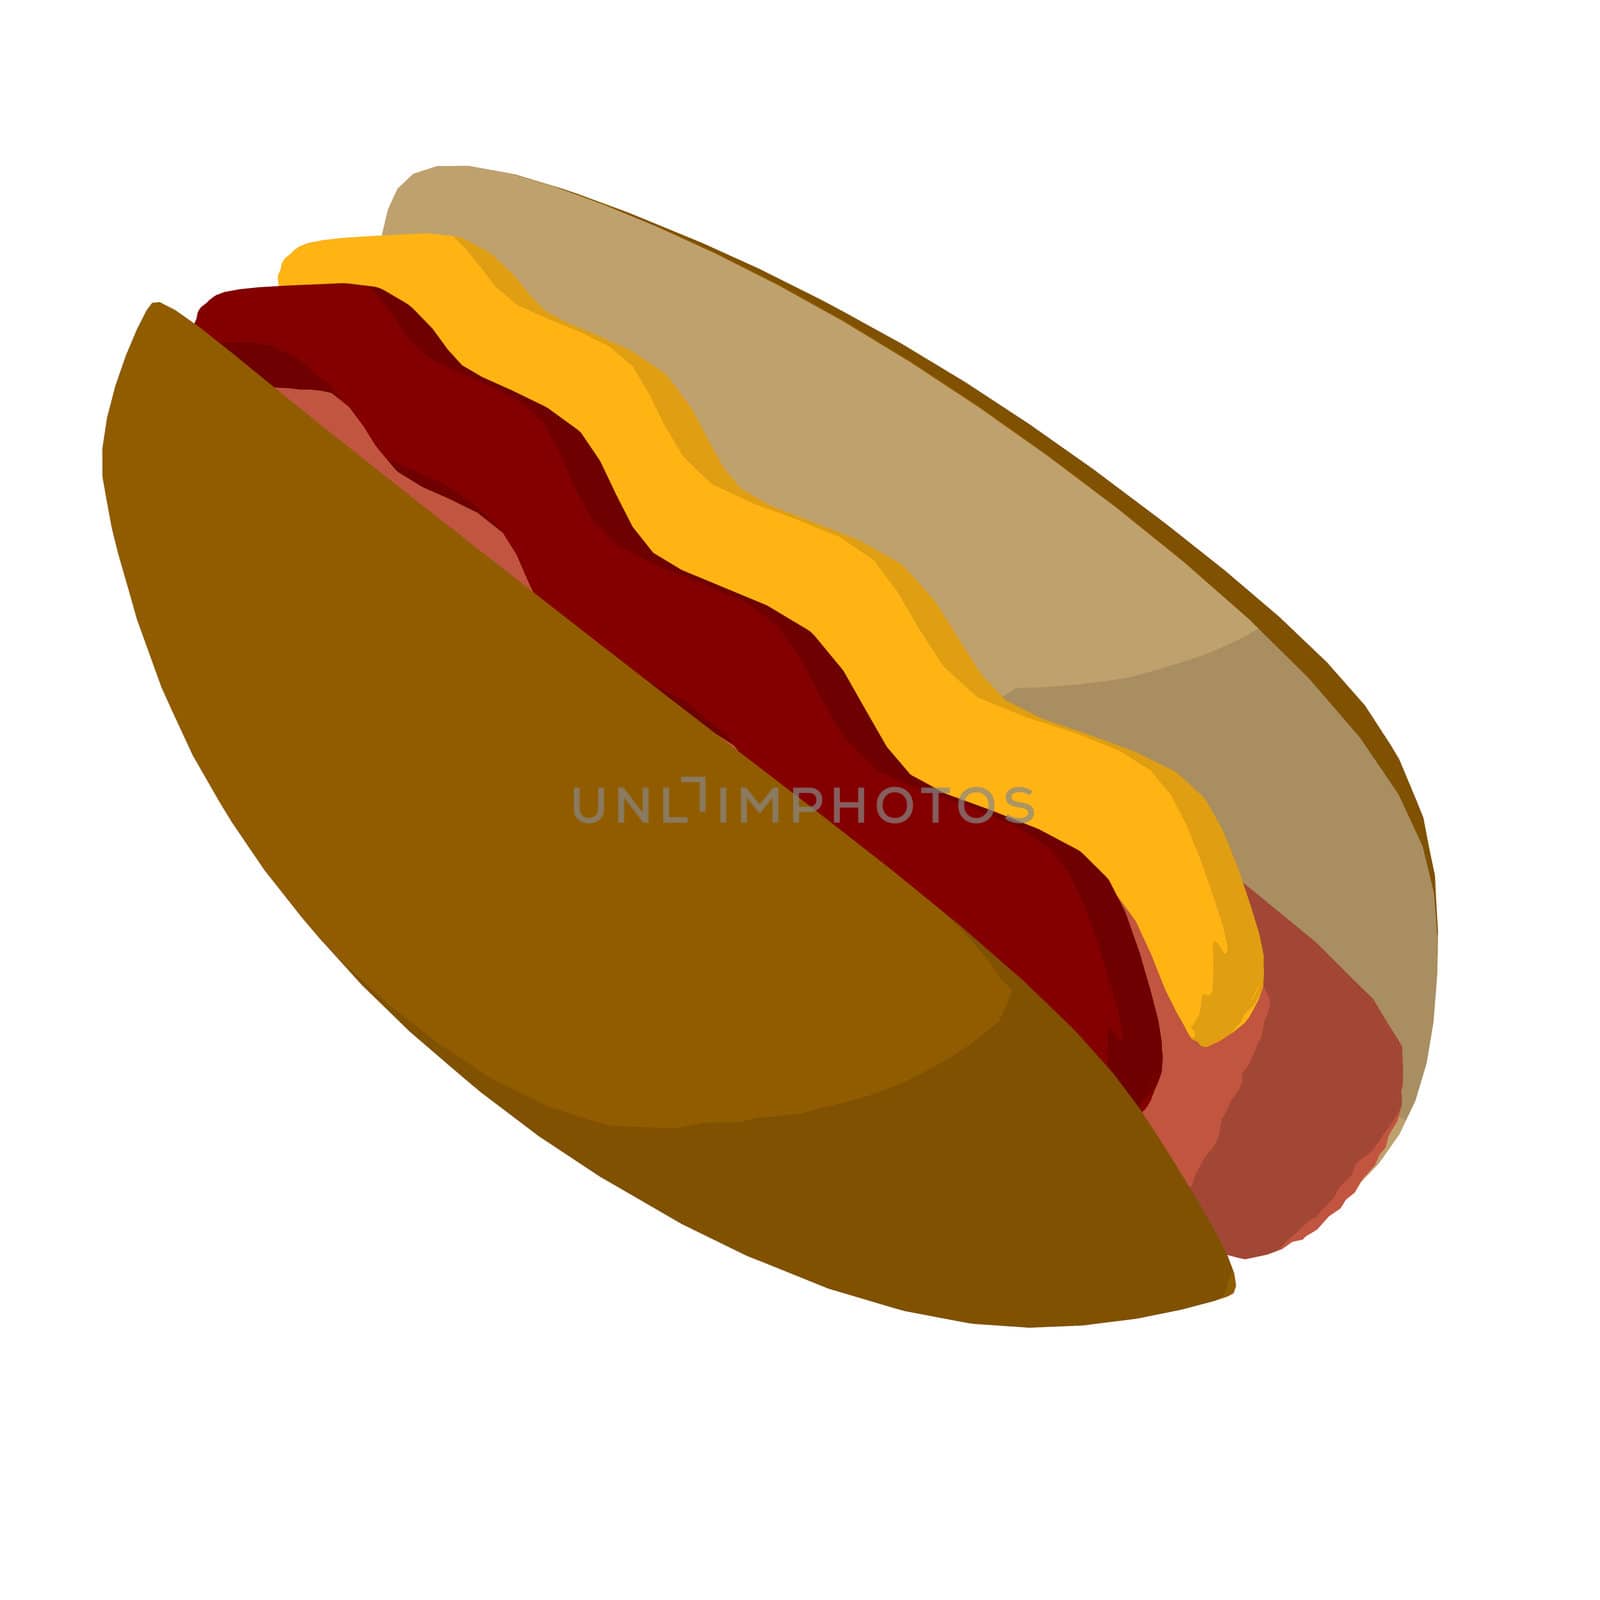 Hot Dog Illustration by kathygold